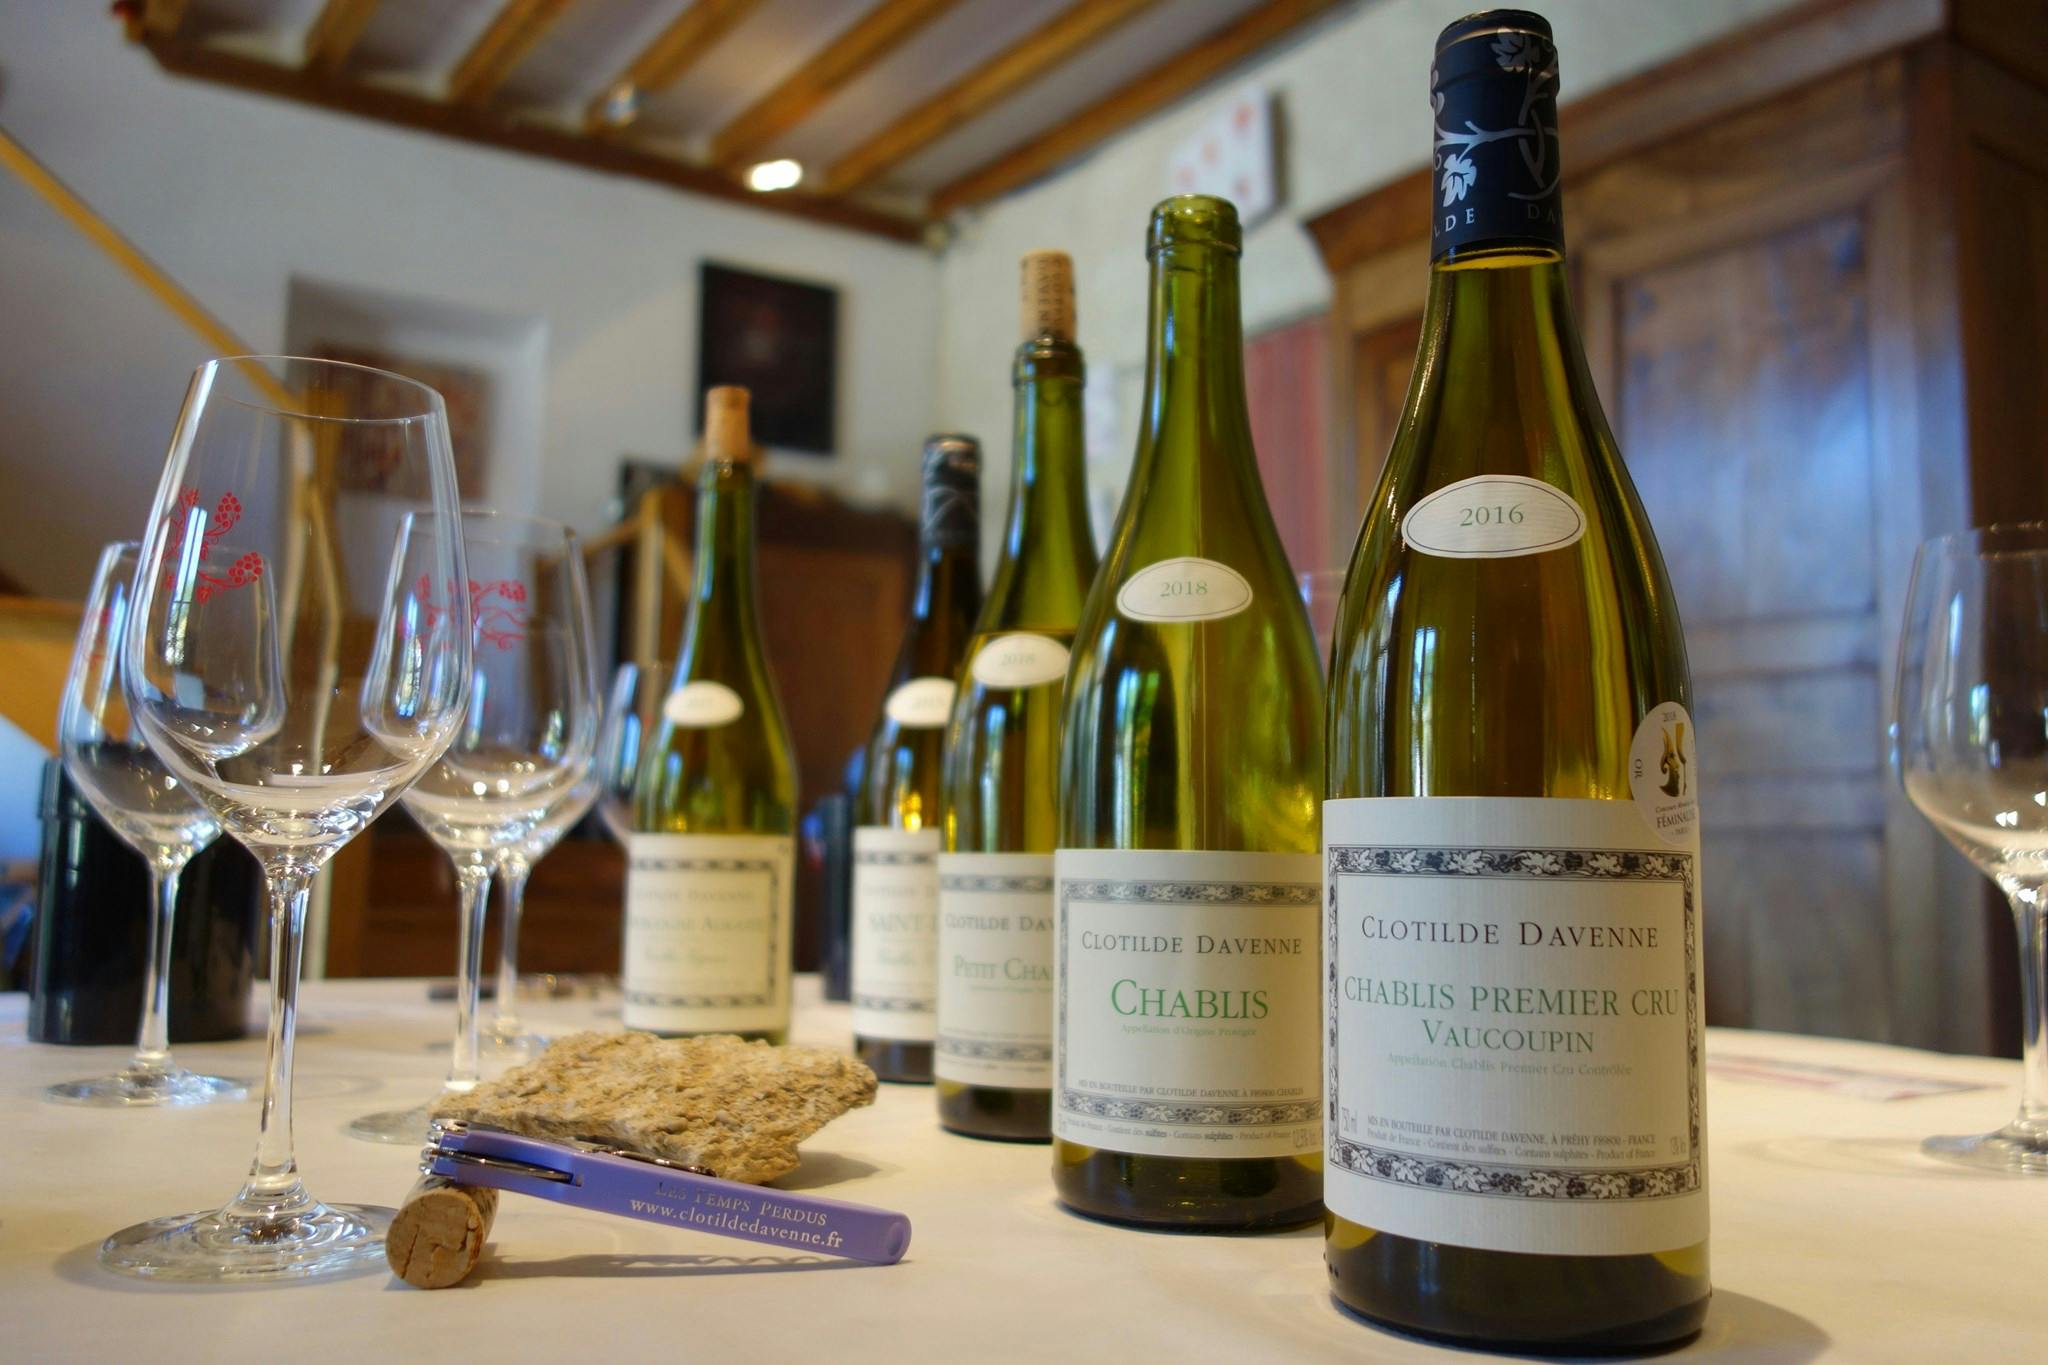 Chablis wine tasting session at the Domaine Clotilde Davenne